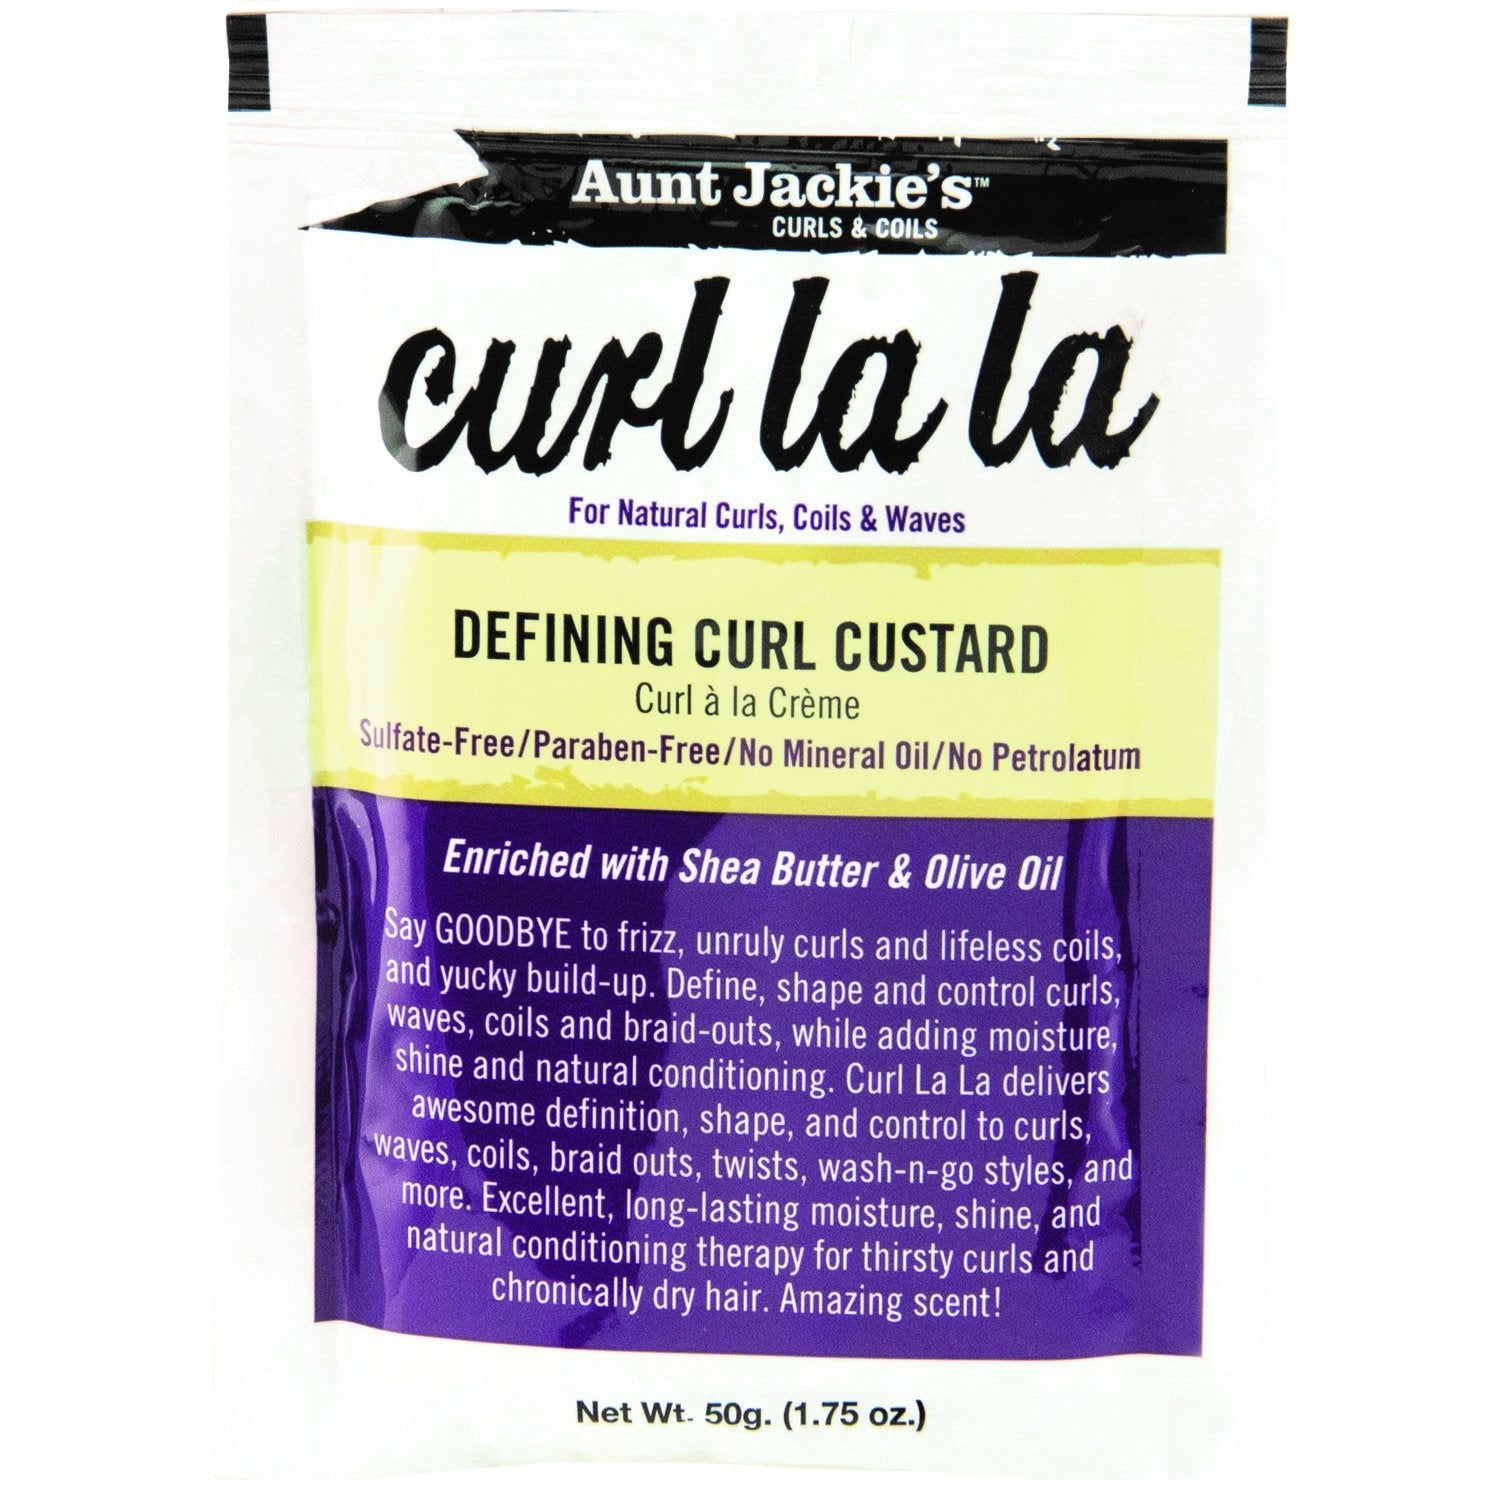 4th Ave Market: Aunt Jackie's Curl La La Defining Curl Custard - 1.75oz